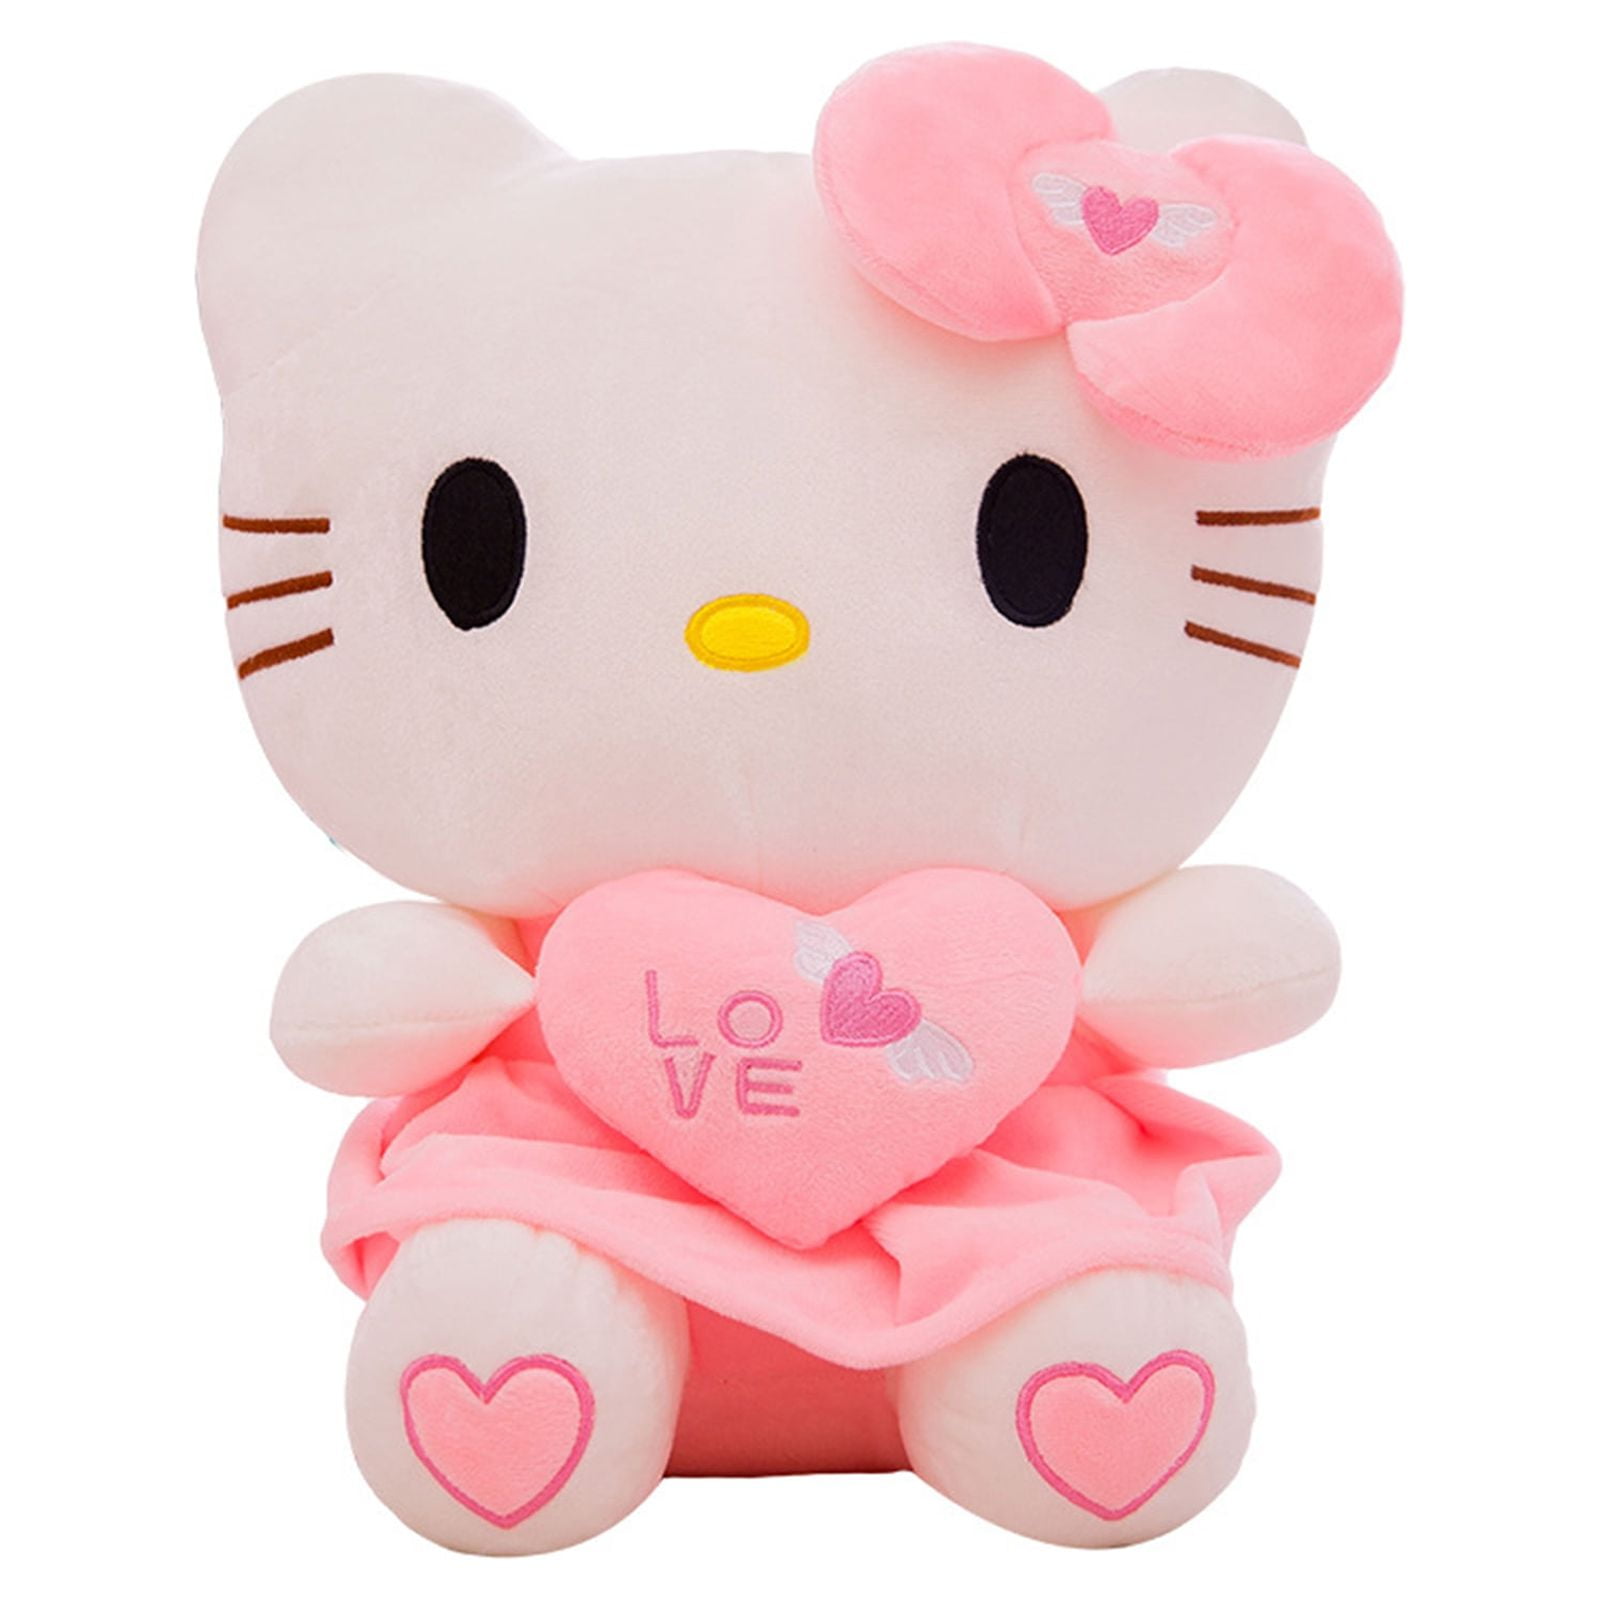 Kawaii Sanrioed Plush Toys Kts Cat Doll Cartoon Soft Fluffy Stuffed Animal  Home Decor Japanese Peluches Child Throw Pillow Gift